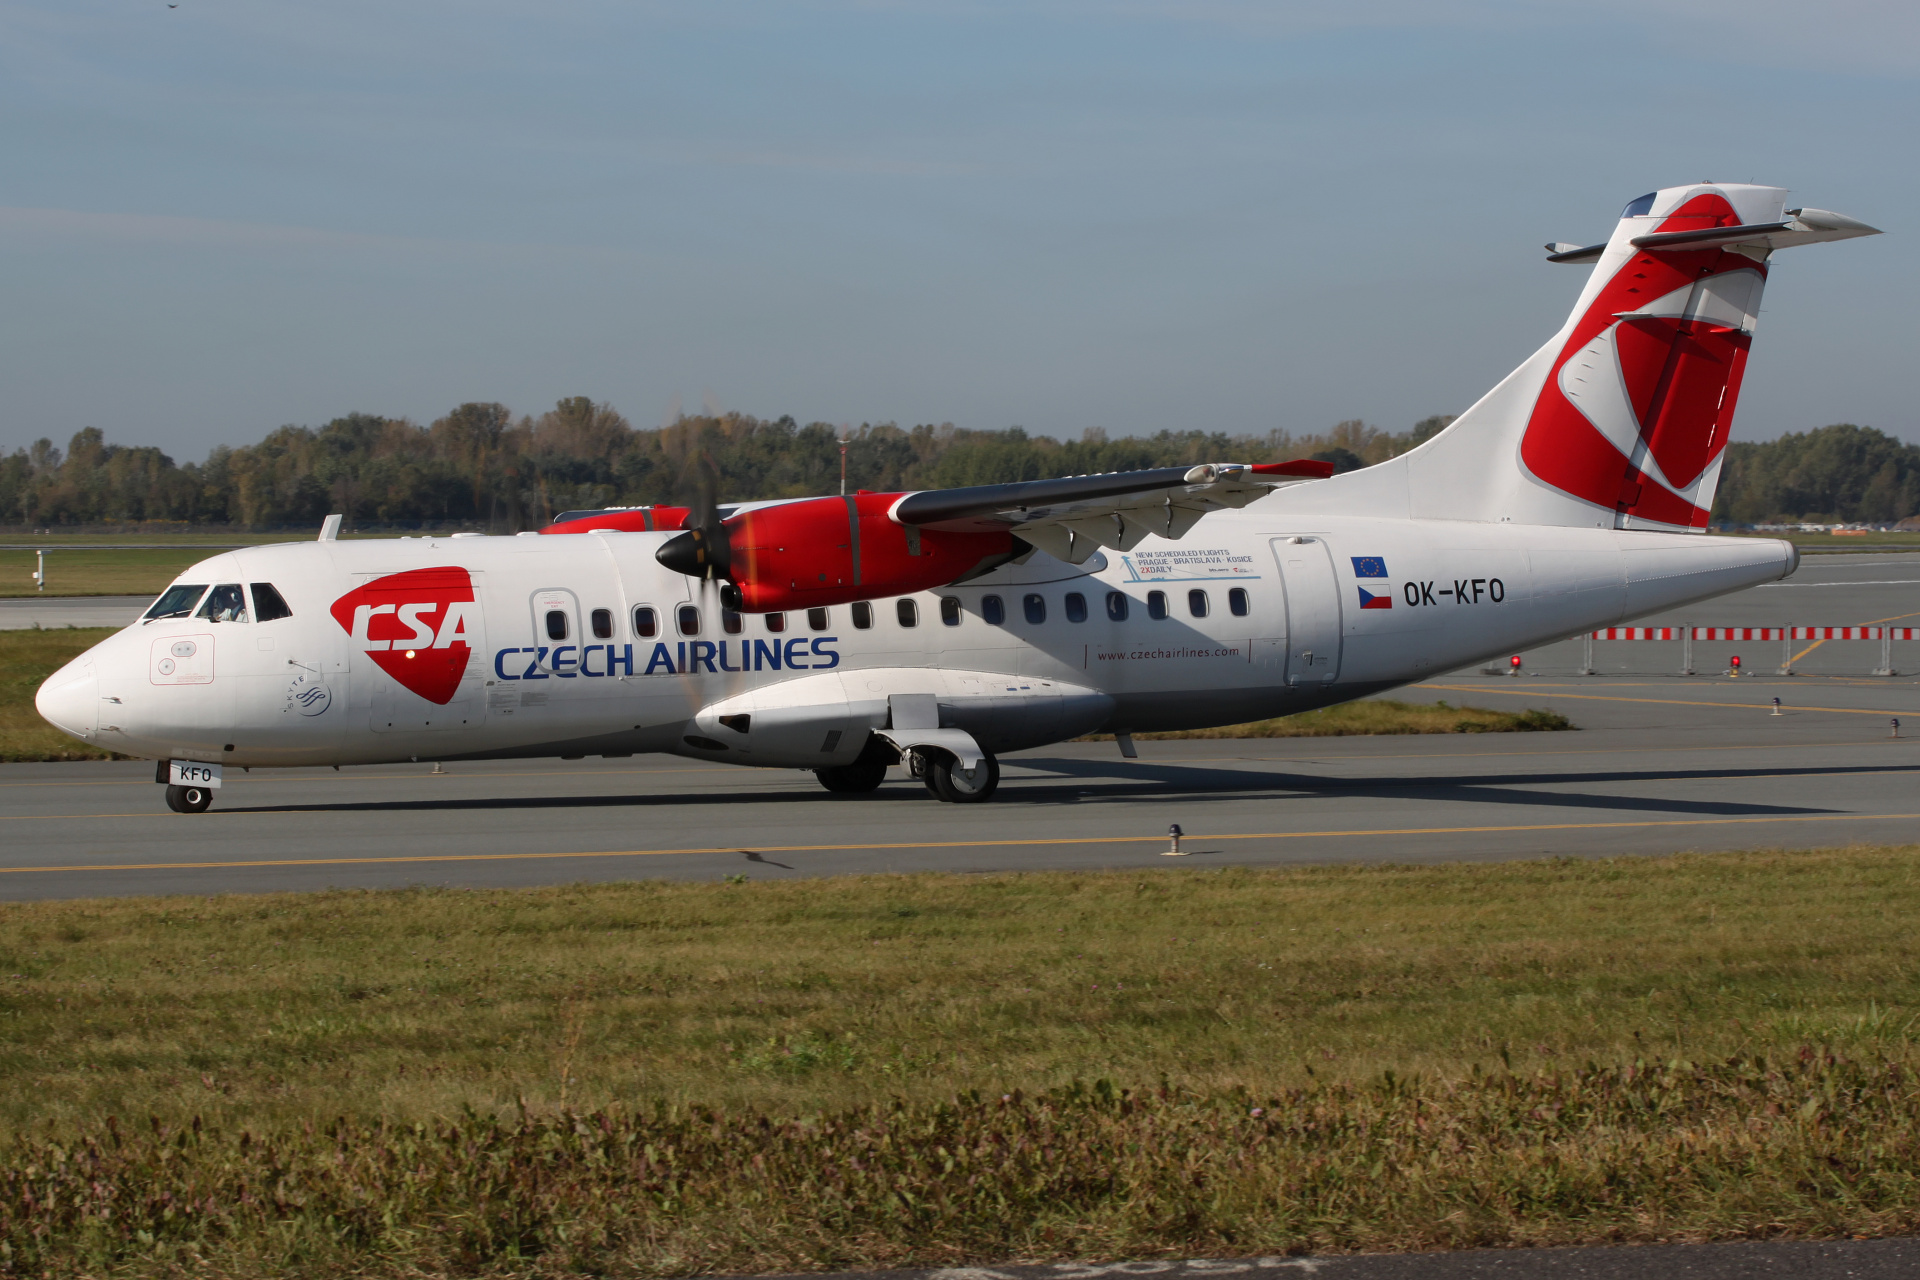 OK-KFO (new livery) (Aircraft » EPWA Spotting » ATR 42 » CSA Czech Airlines)